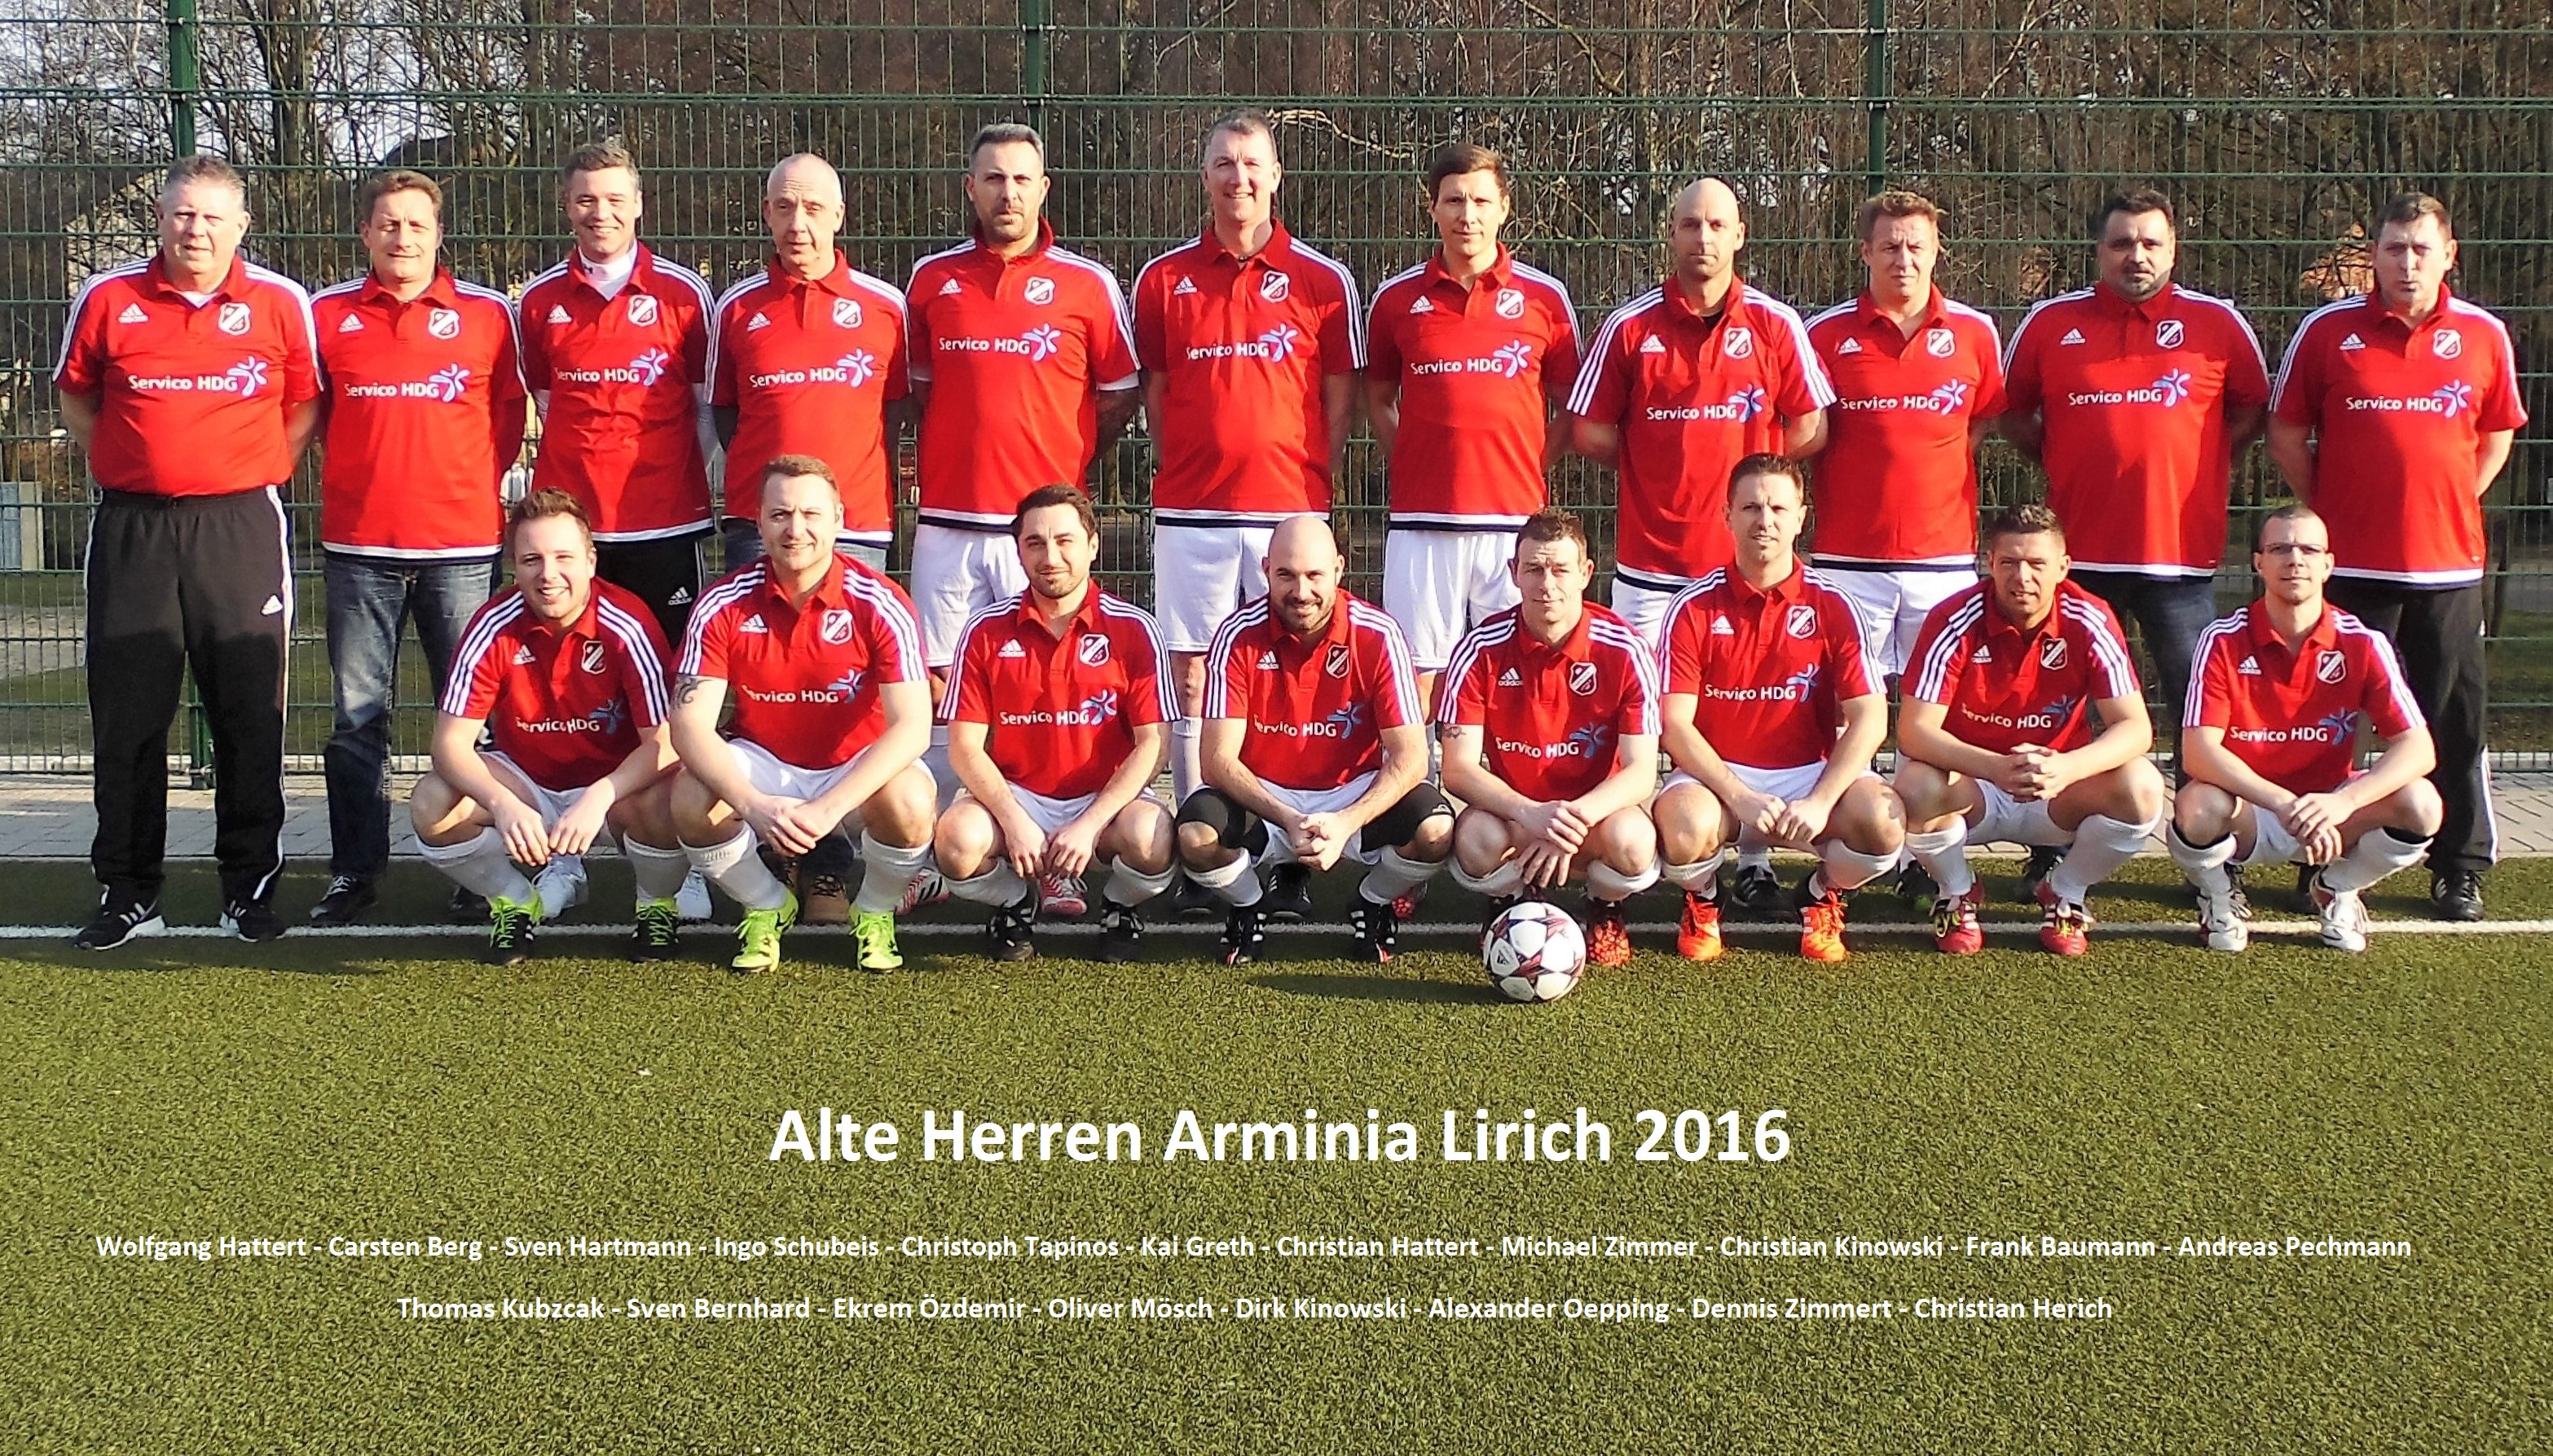 Neuer Sponsor Djk Arminia Lirich 19